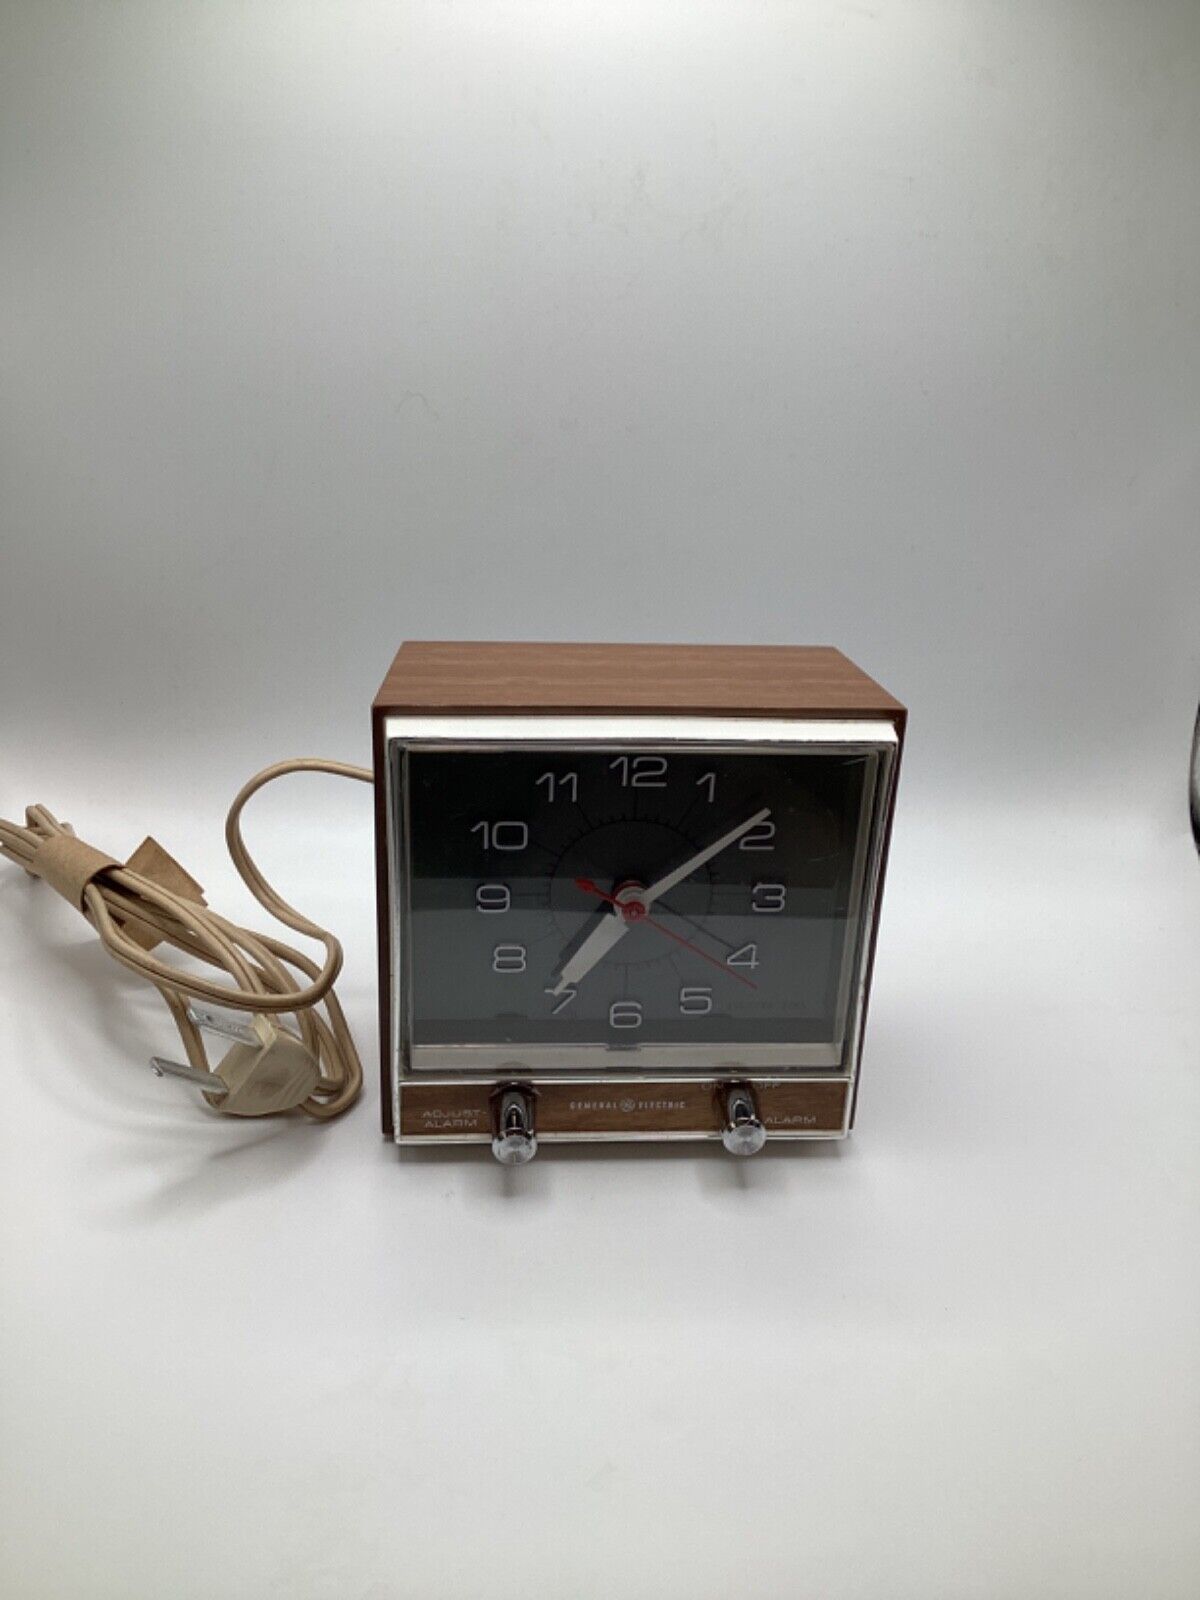 Mid Century General Electric Alarm Clock Model 7345-9  Analog Works Beautifully